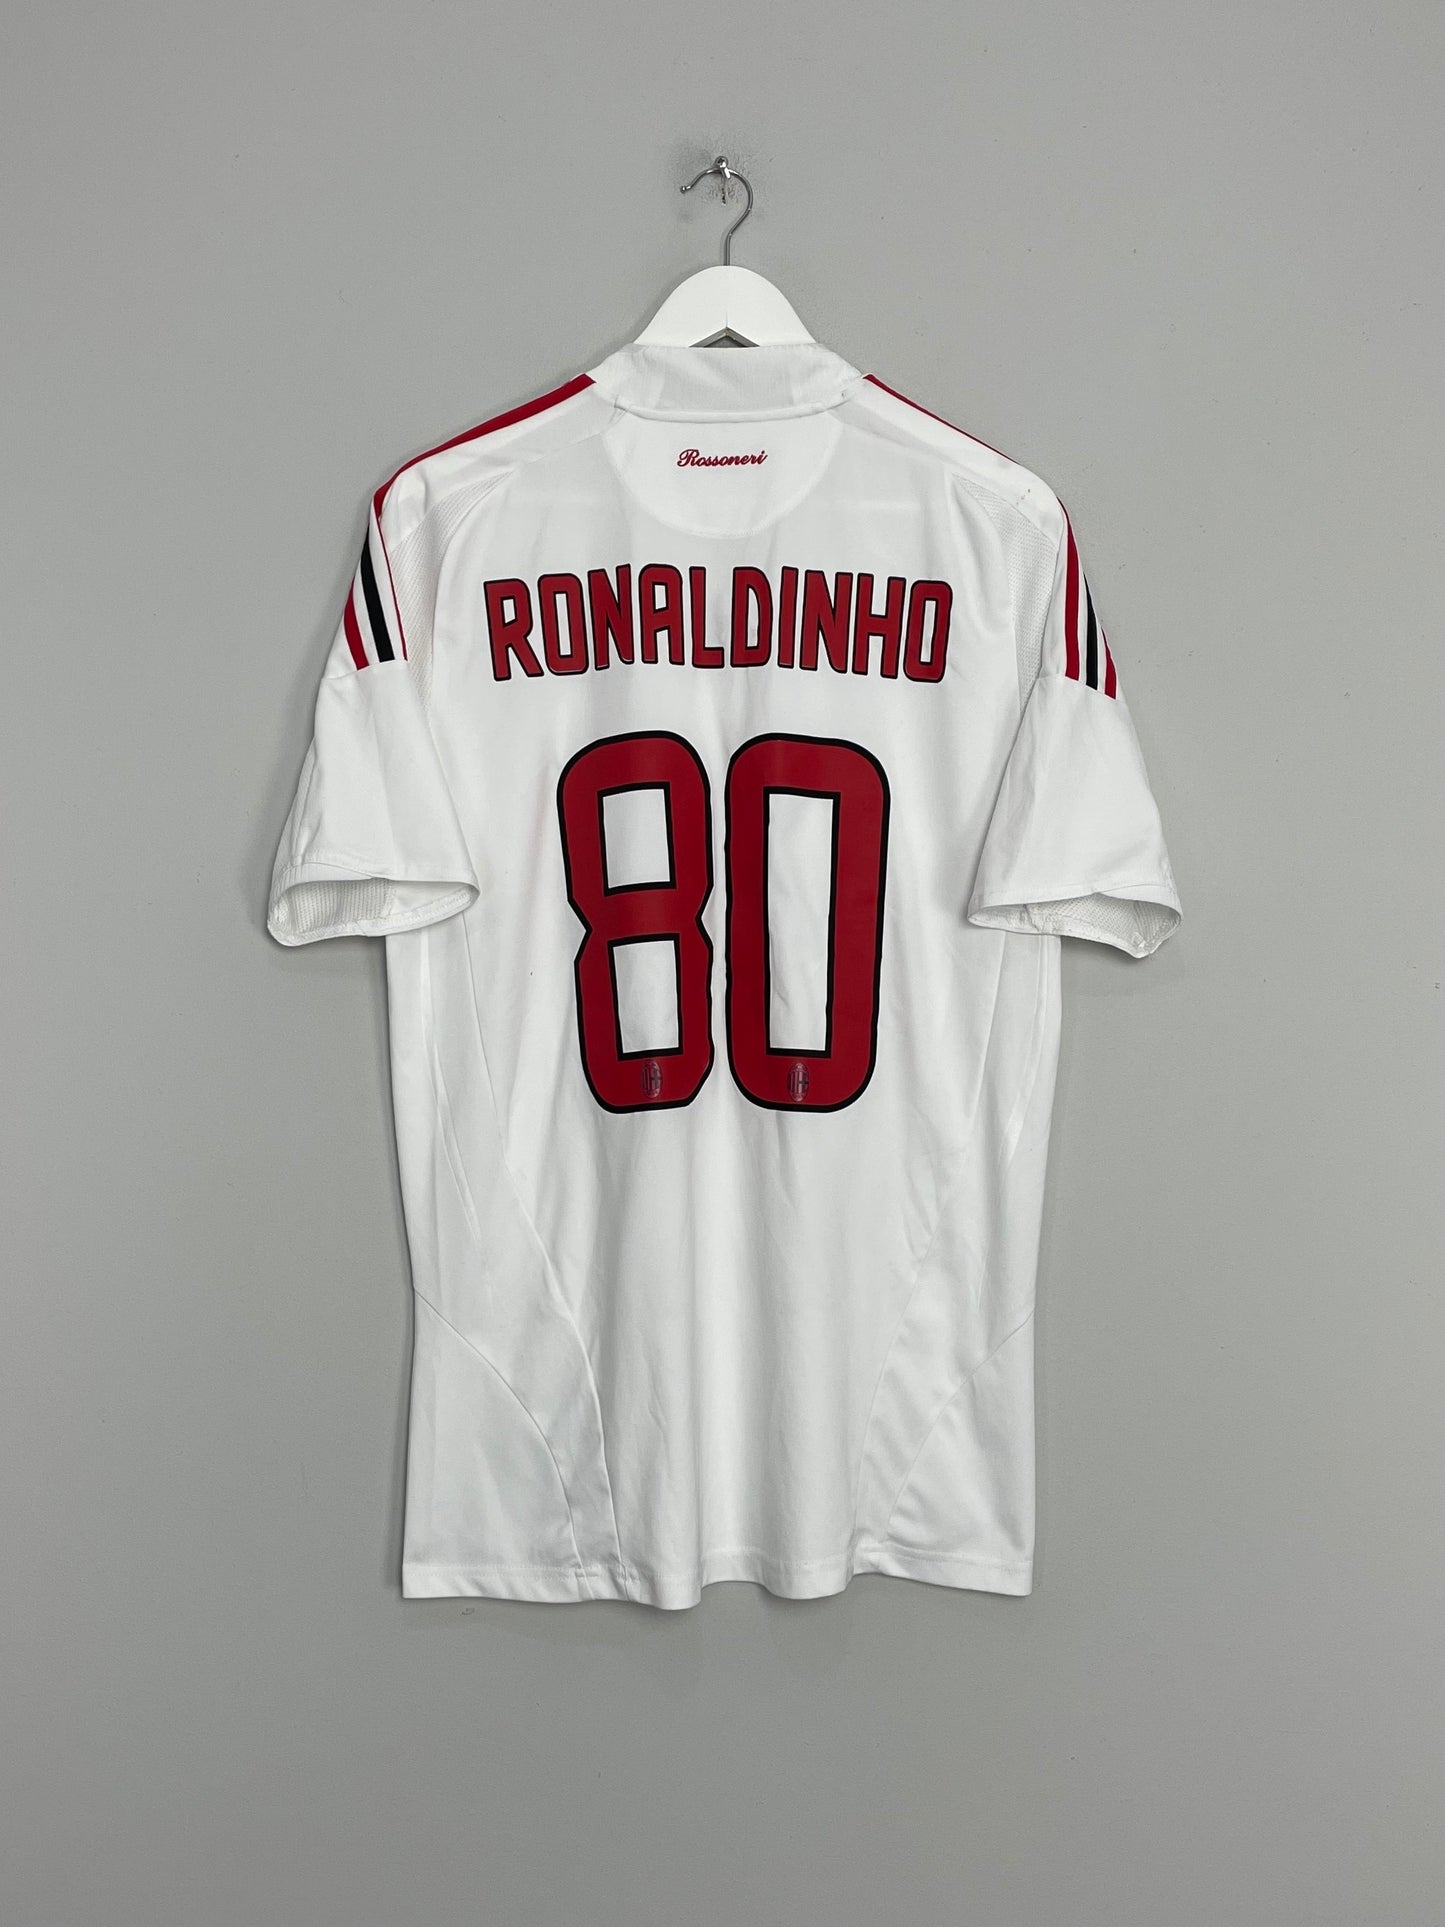 Image of the AC Milan Ronaldinho shirt from the 2008/09 season